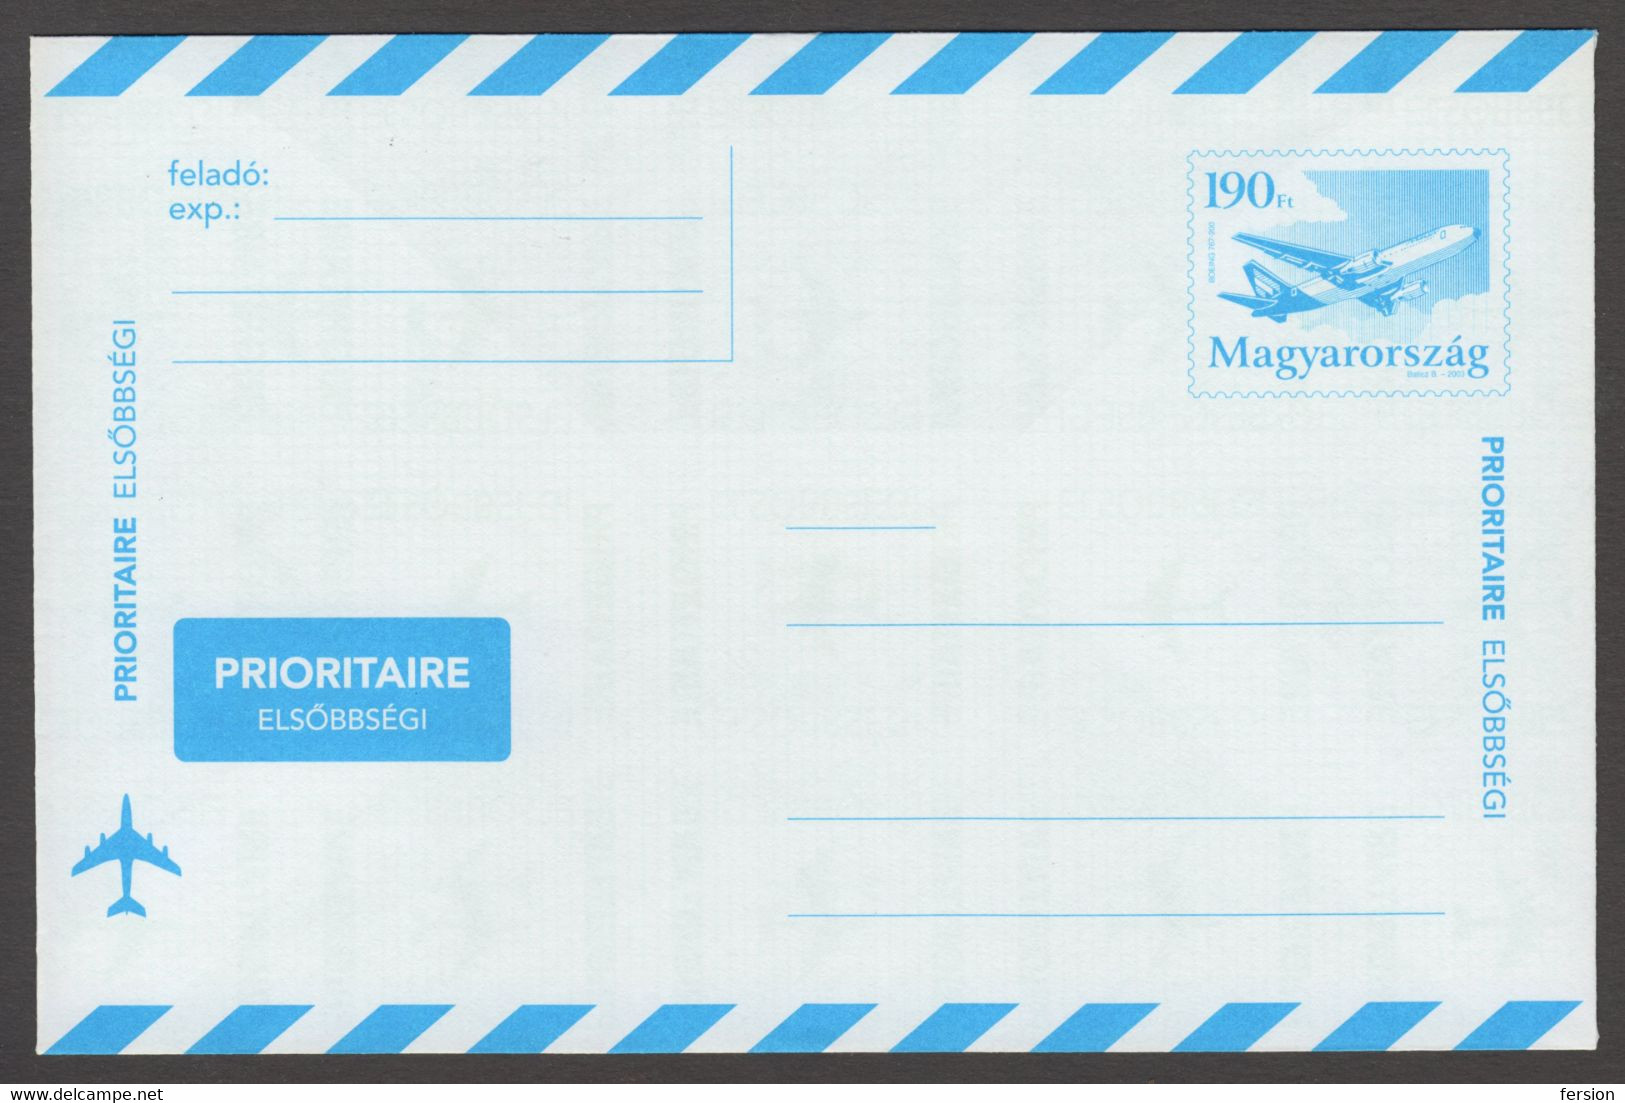 BOEING 737 MALÉV Airplane Airliner 2003 Hungary AIR MAIL PAR AVION Postal Stationery 190 Ft Cover Letter Envelope - Cartas & Documentos